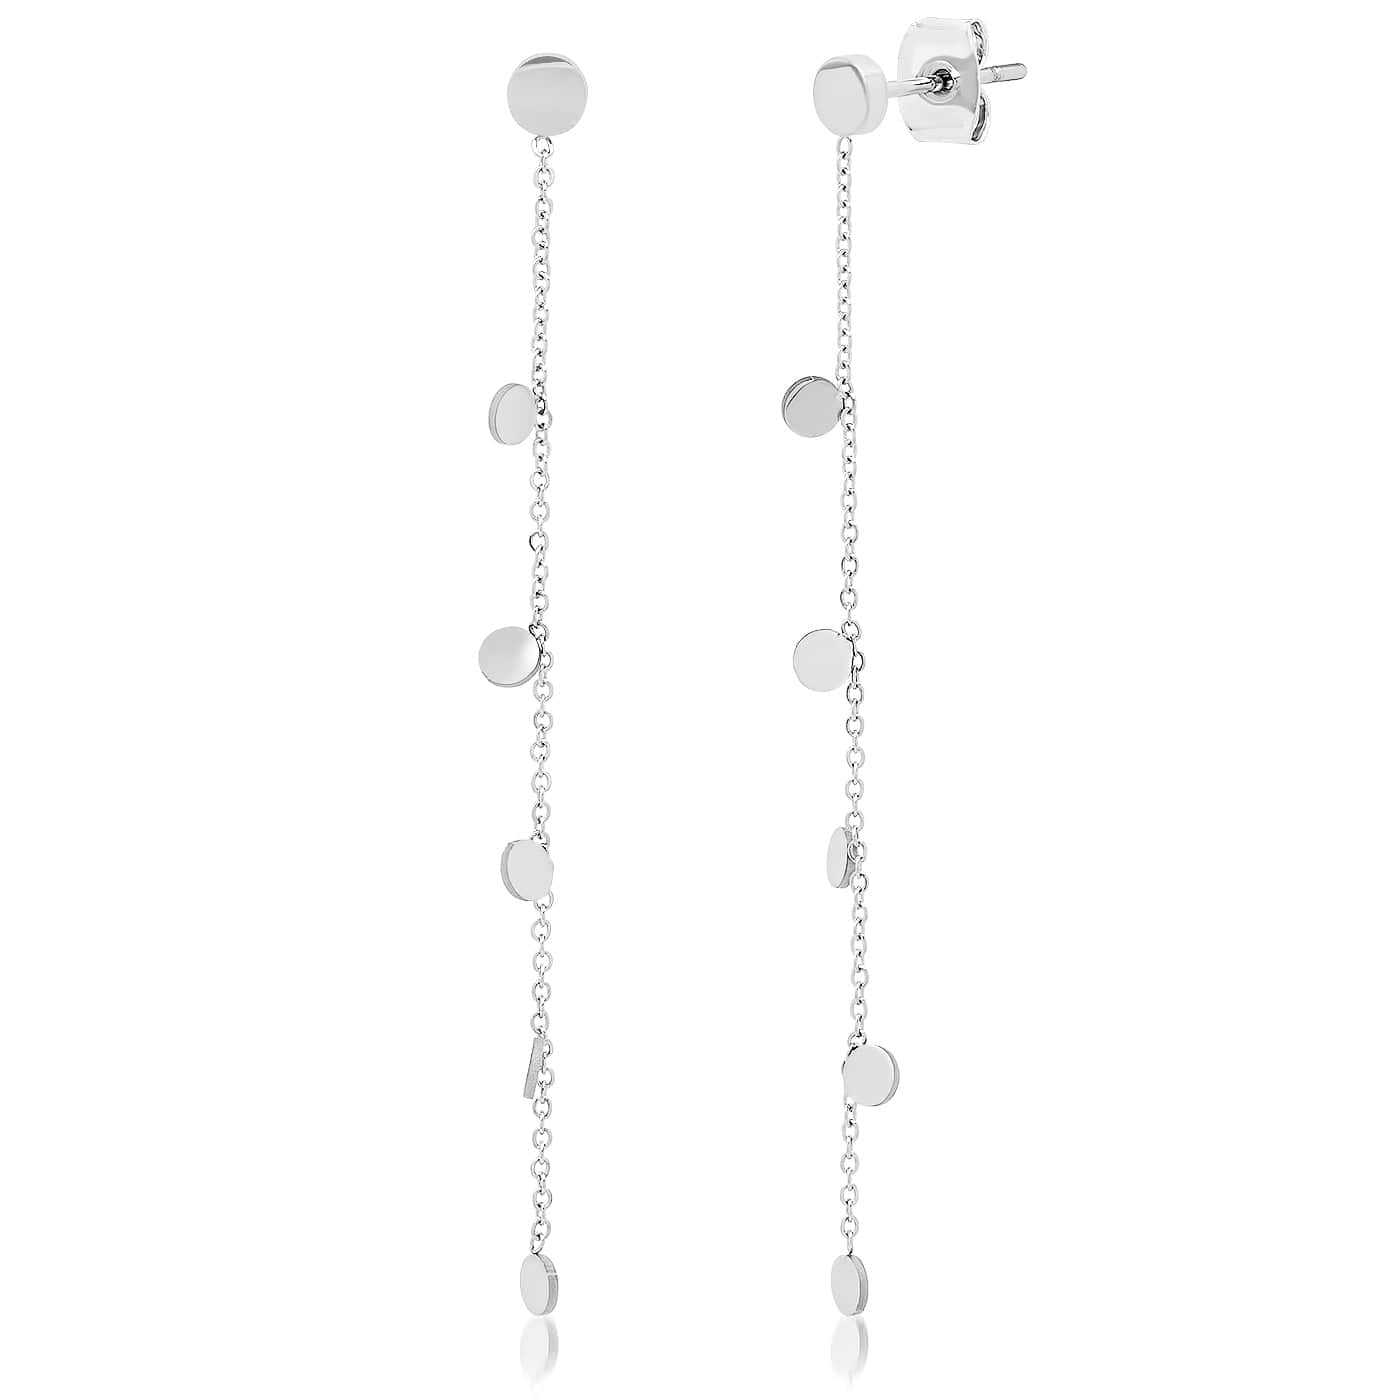 TAI JEWELRY Earrings Silver Chain Dangle Earrings With Circular Disc Charms